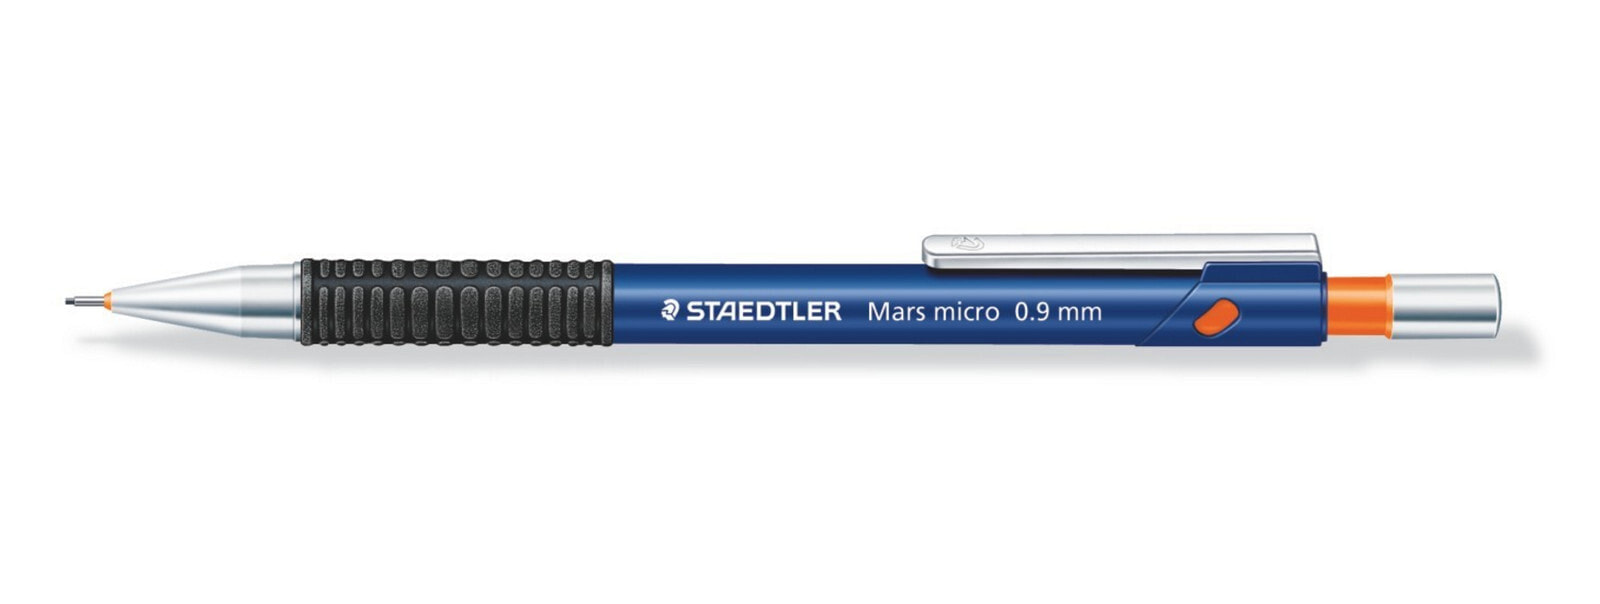 Staedtler Mars micro 775 0.9mm механический карандаш B 0,9 mm 1 шт 775 09